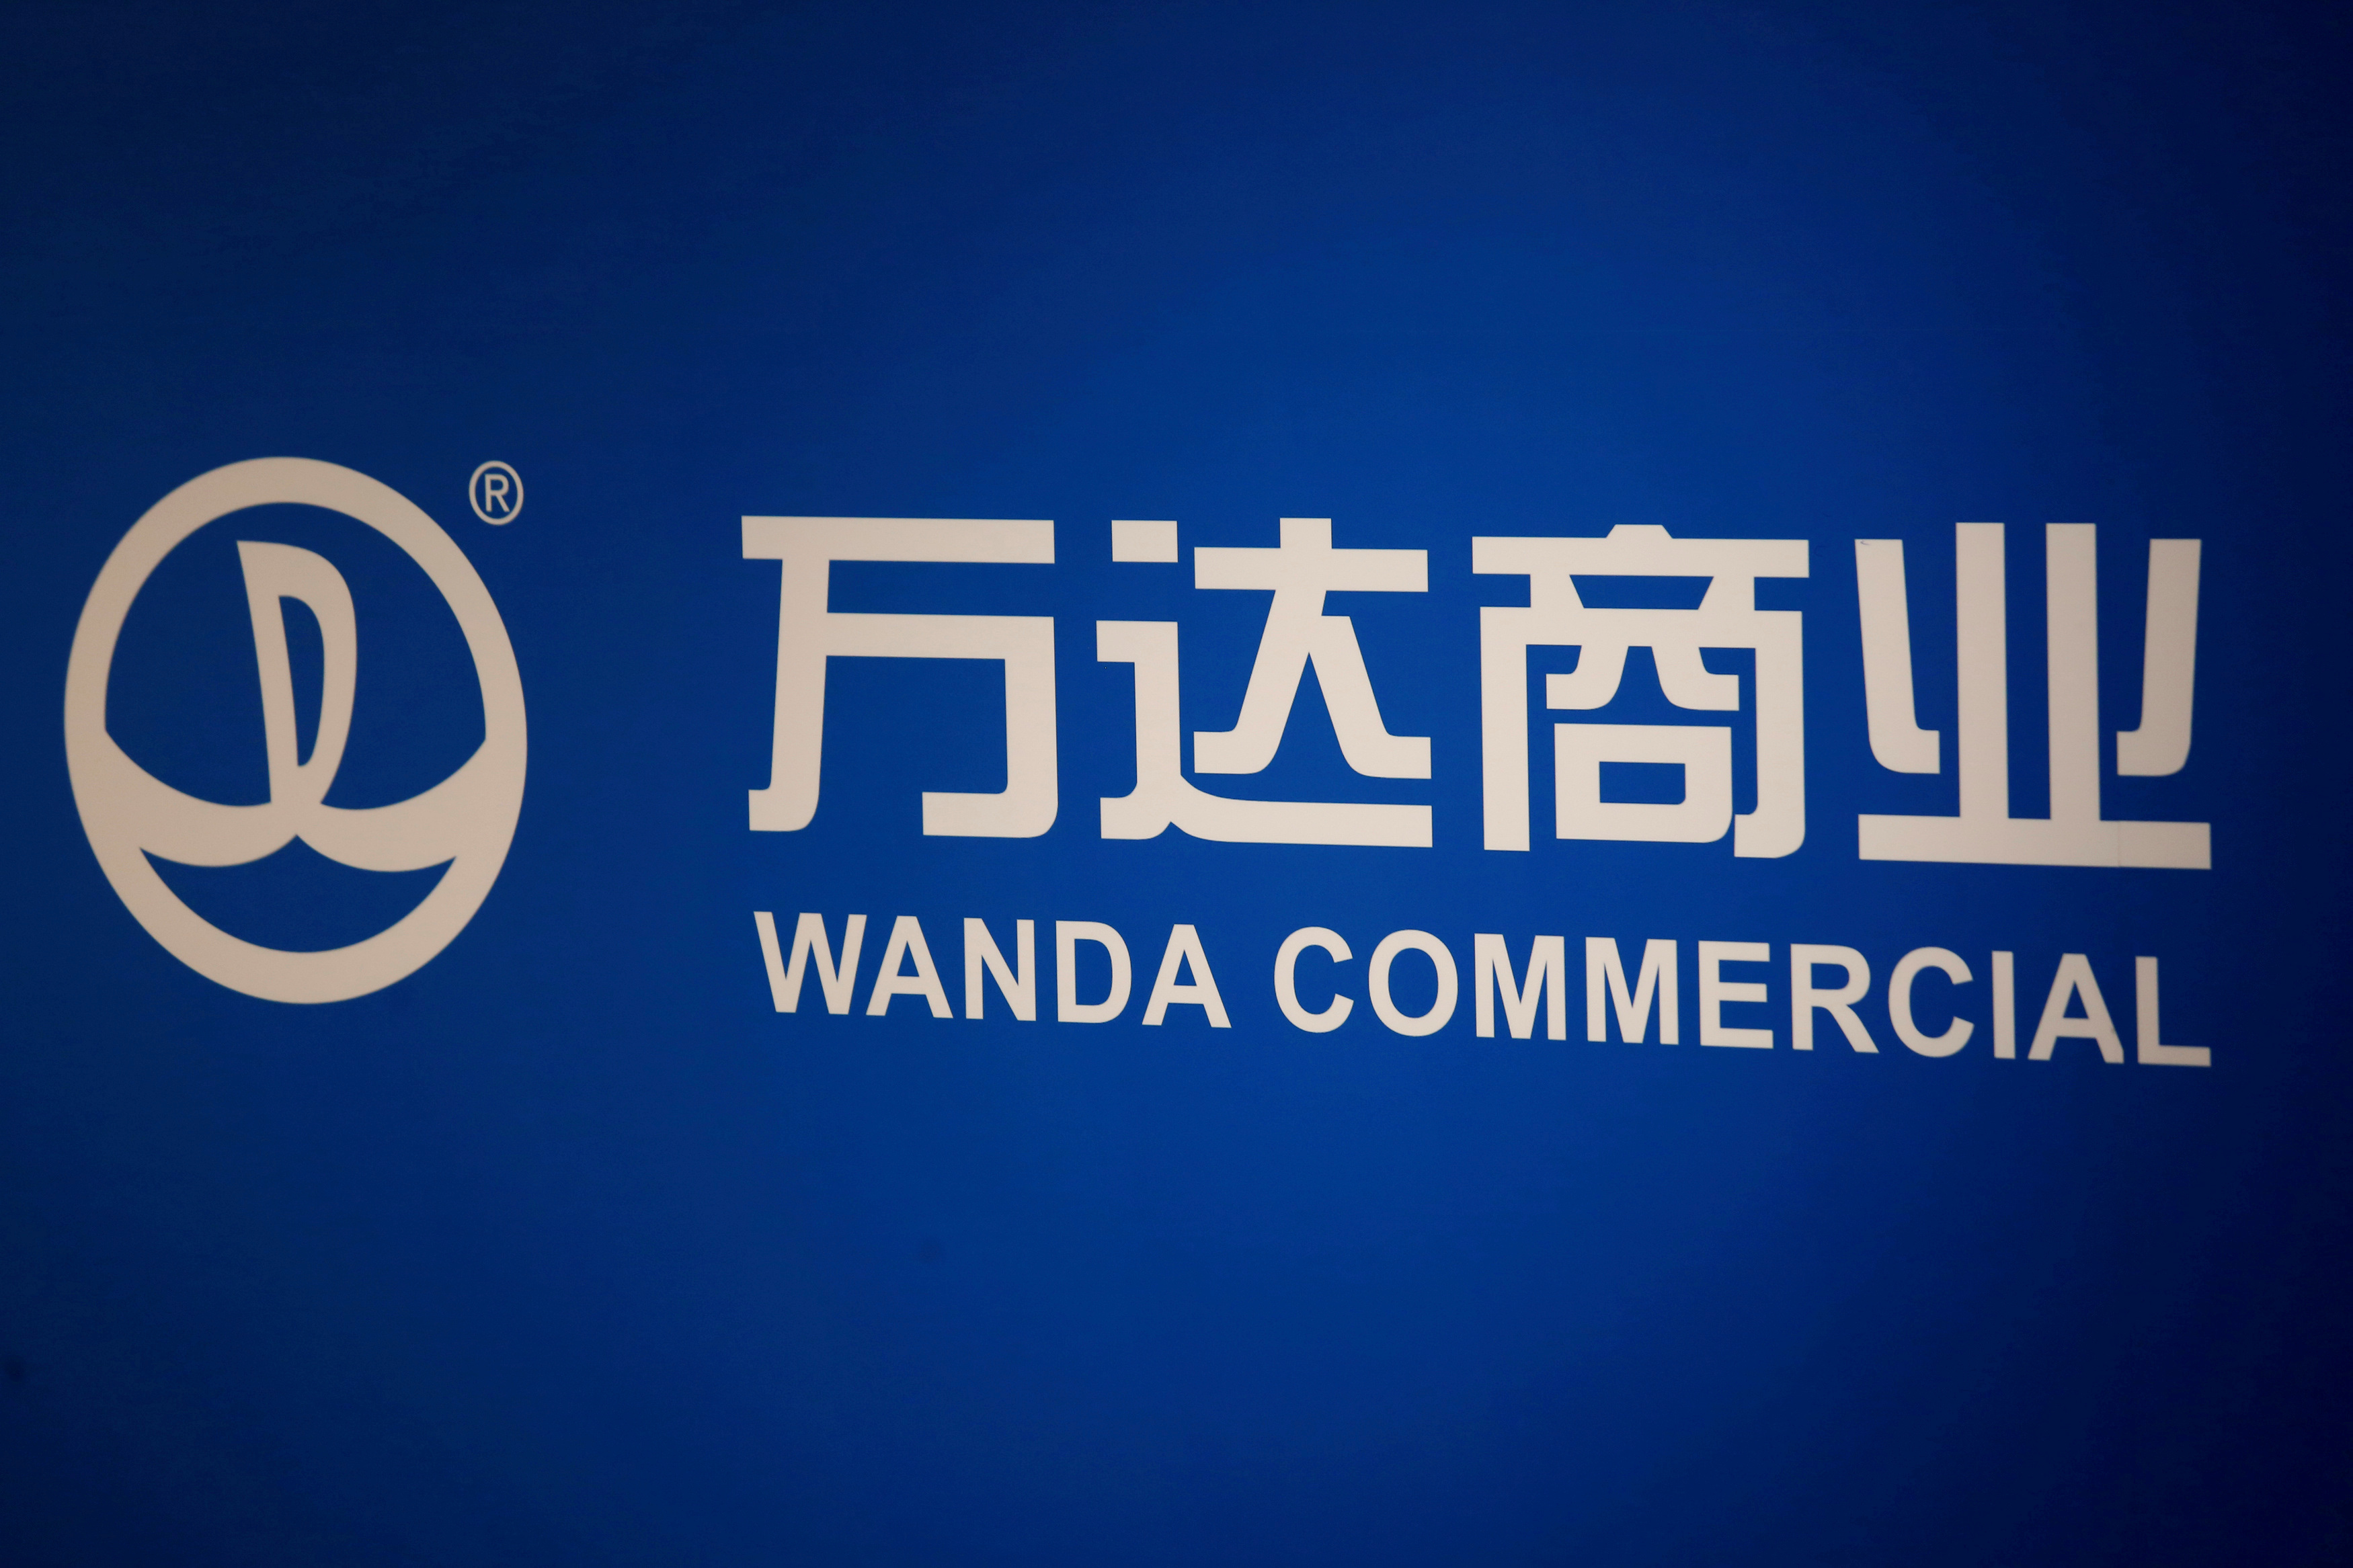 The company logo of Dalian Wanda Commercial Properties Co Ltd is displayed in Hong Kong